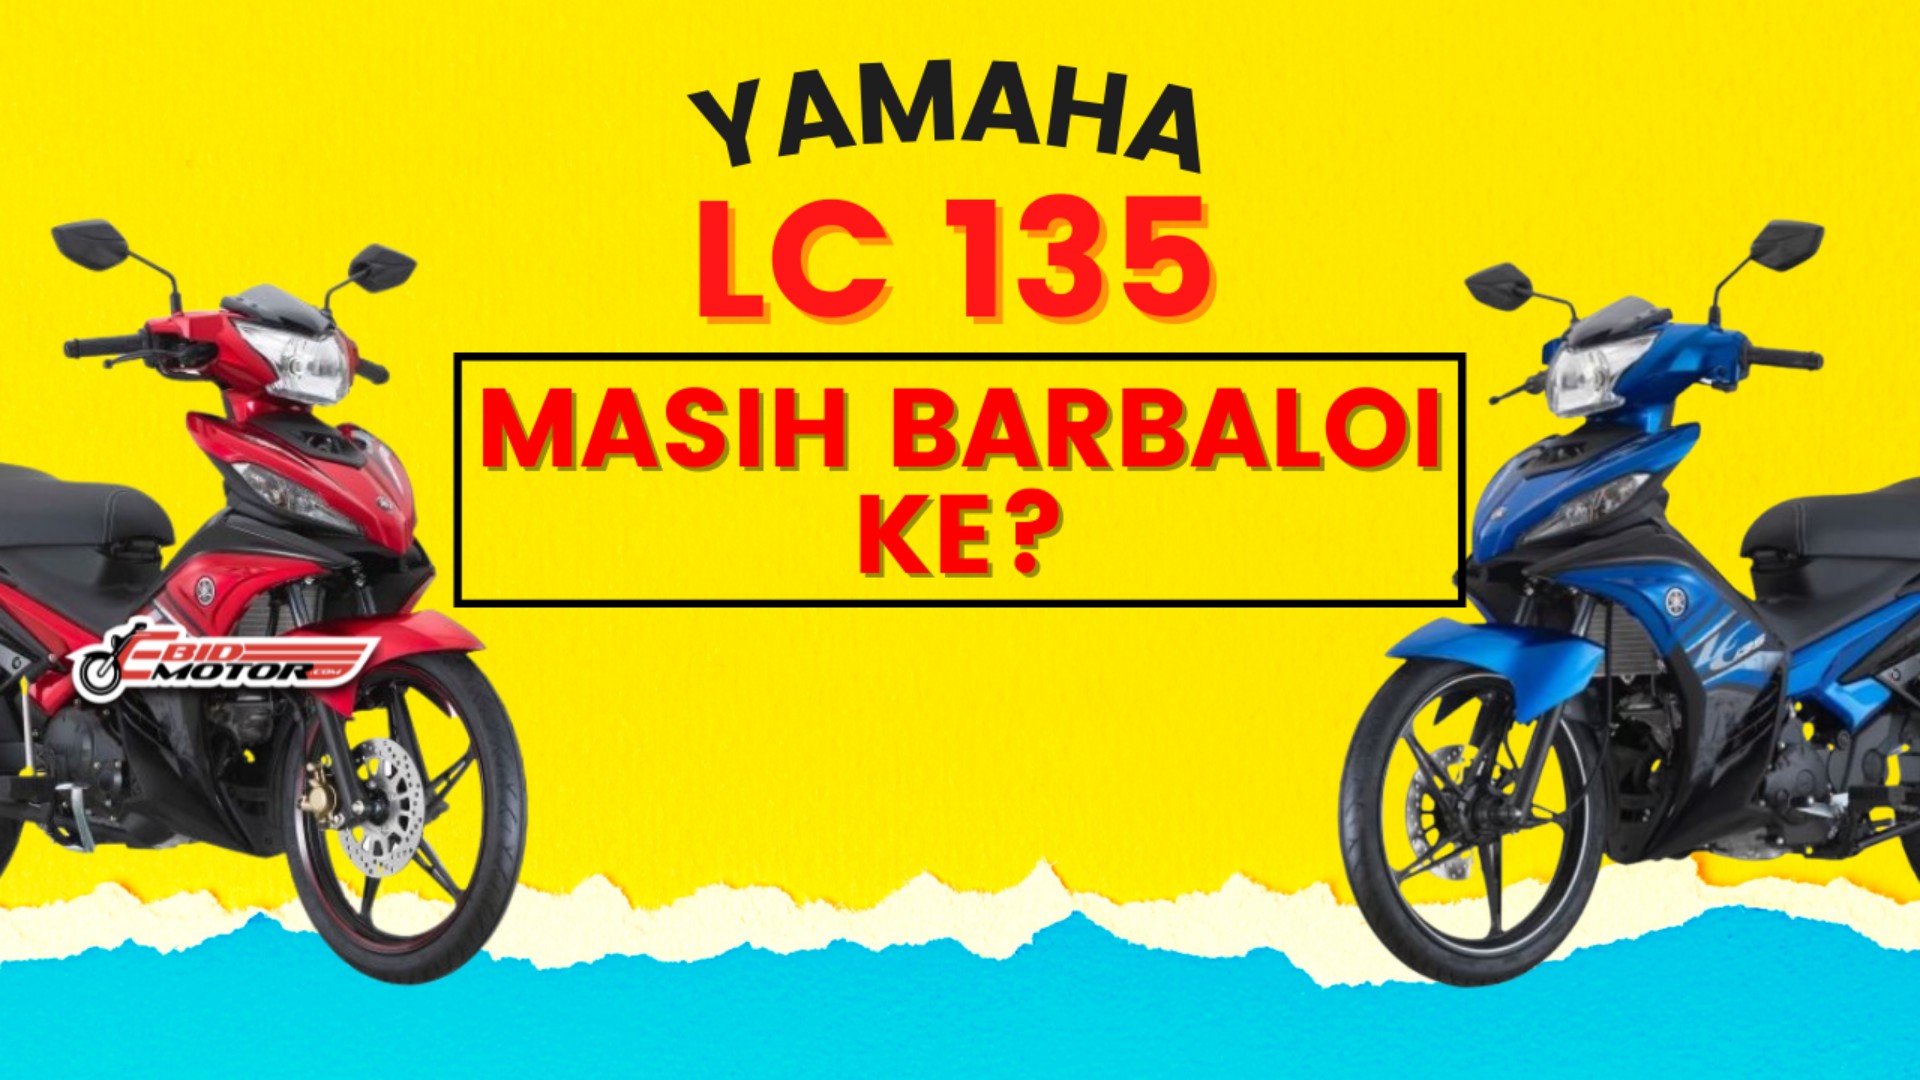 Berbaloi Ke Beli Yamaha LC135 Di Zaman Y?